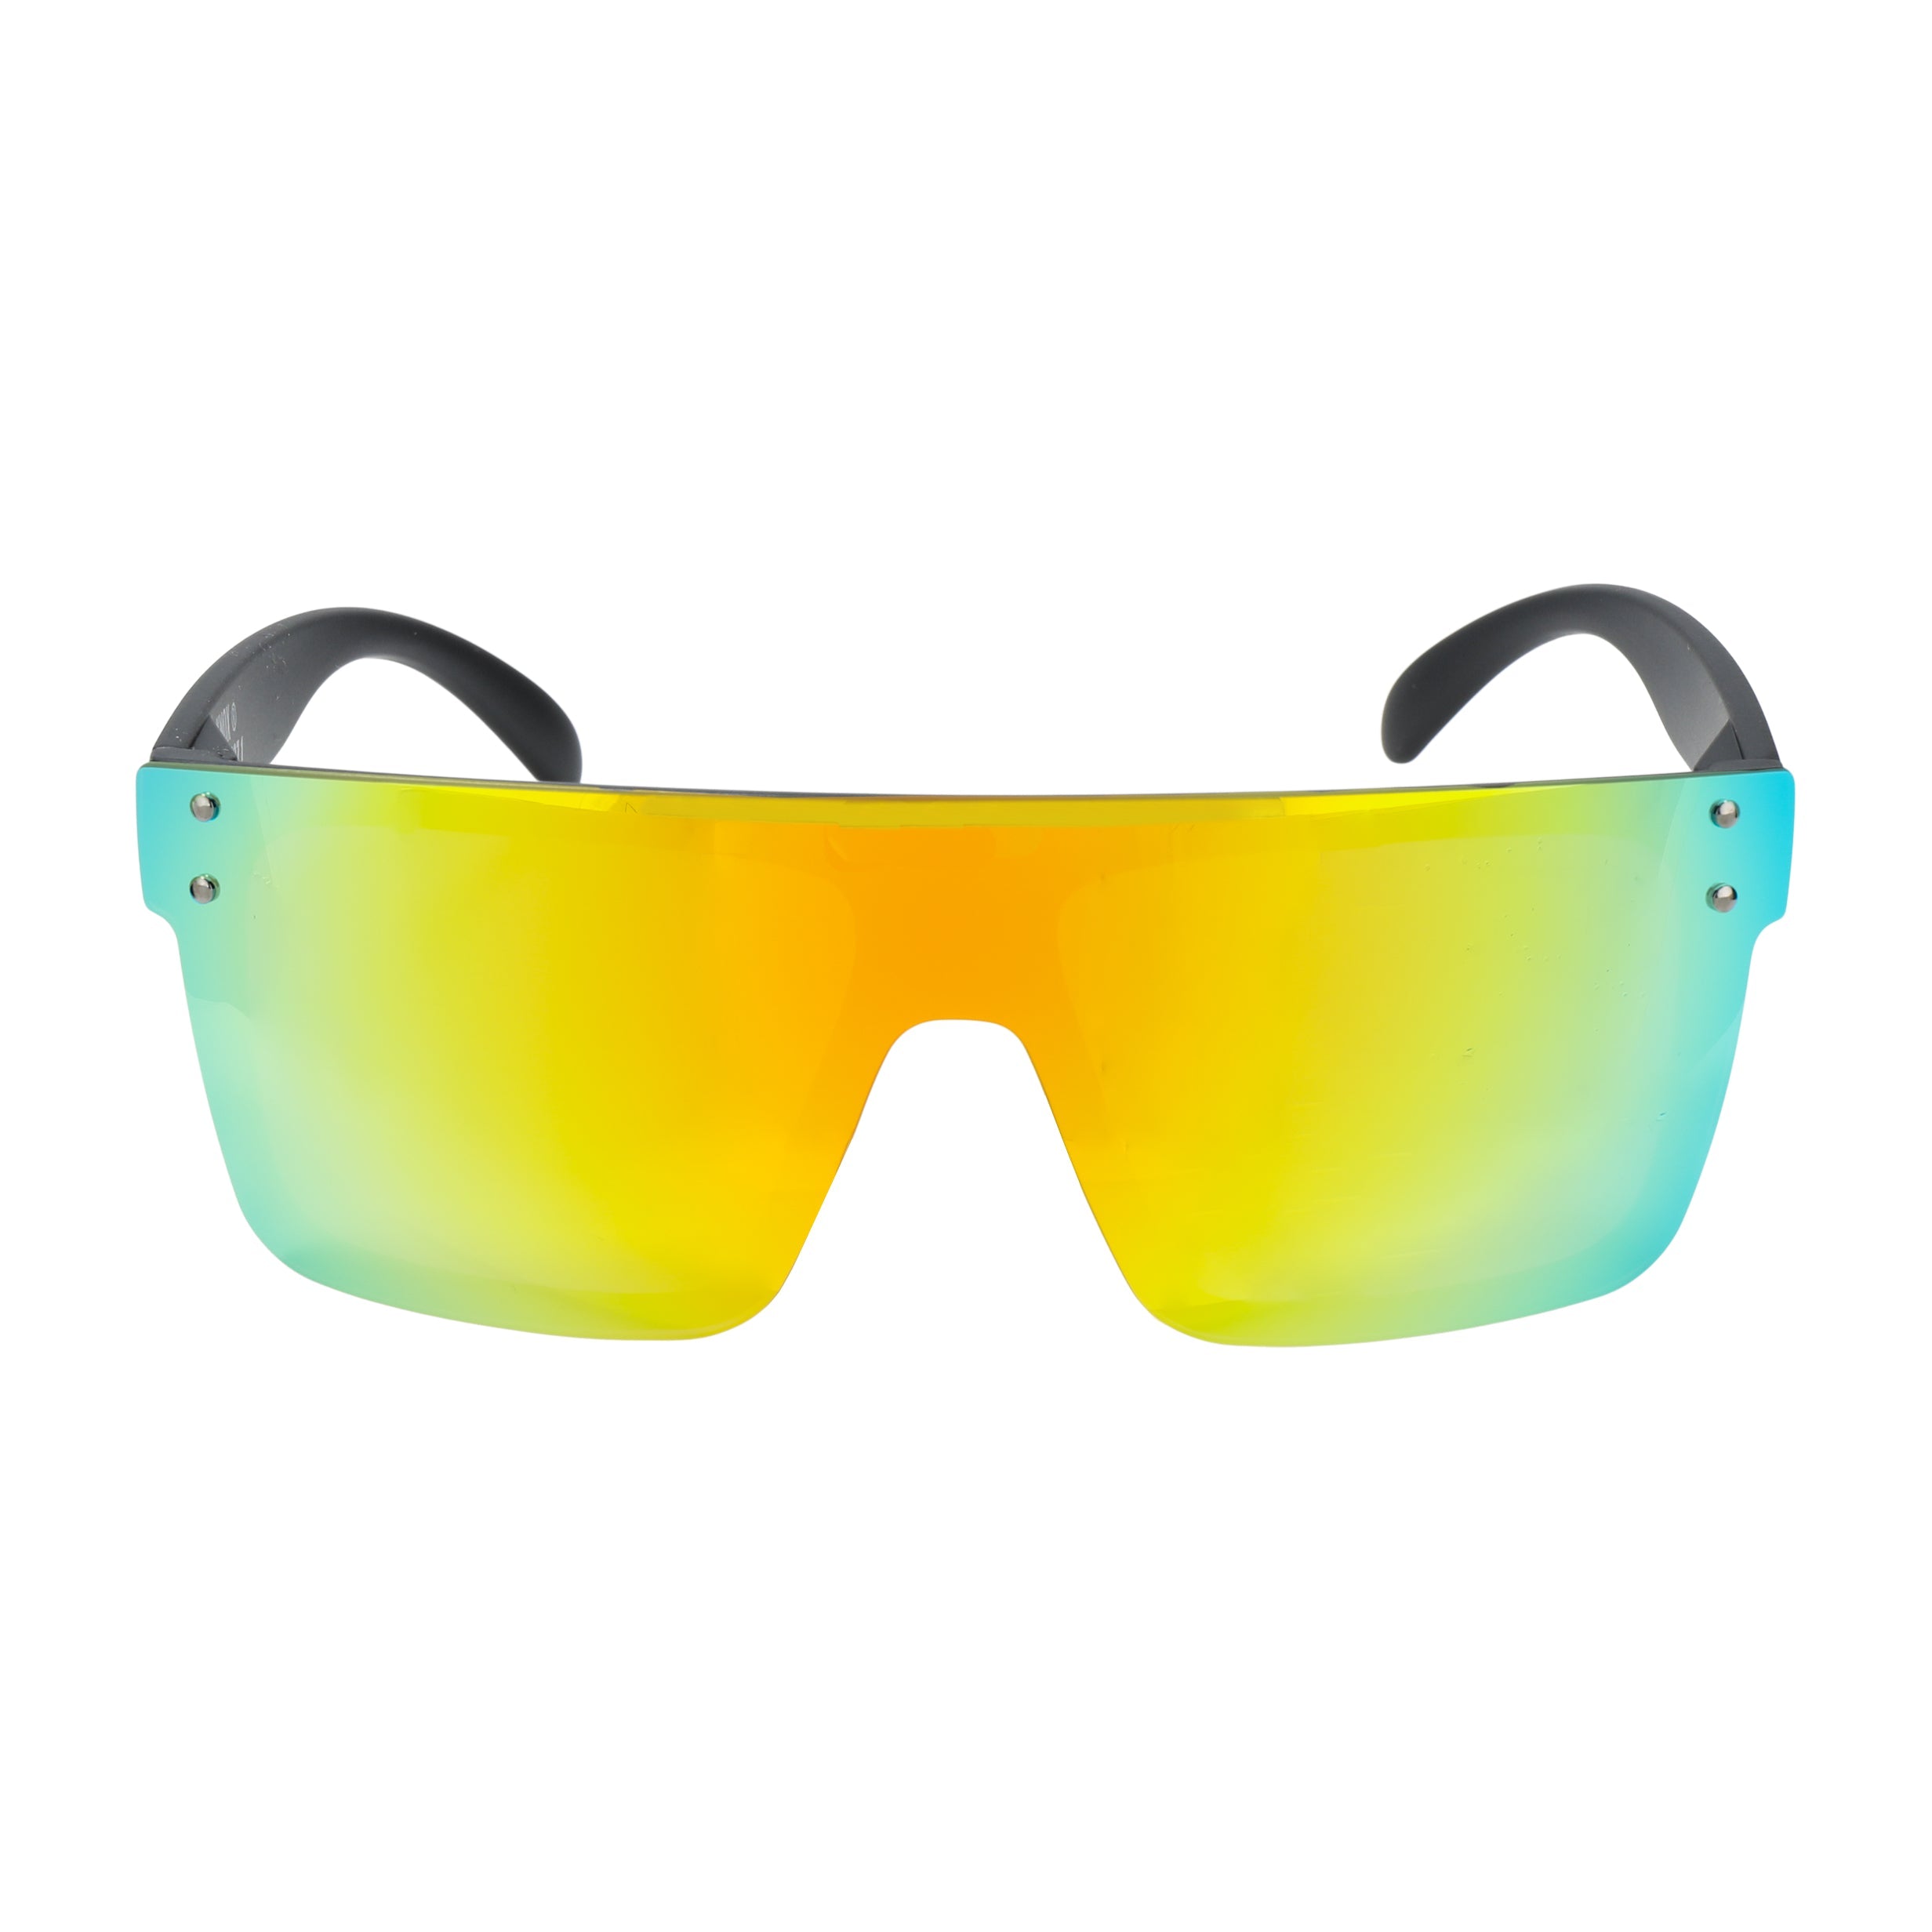 The Sundown Z87 Safety Sunglasses